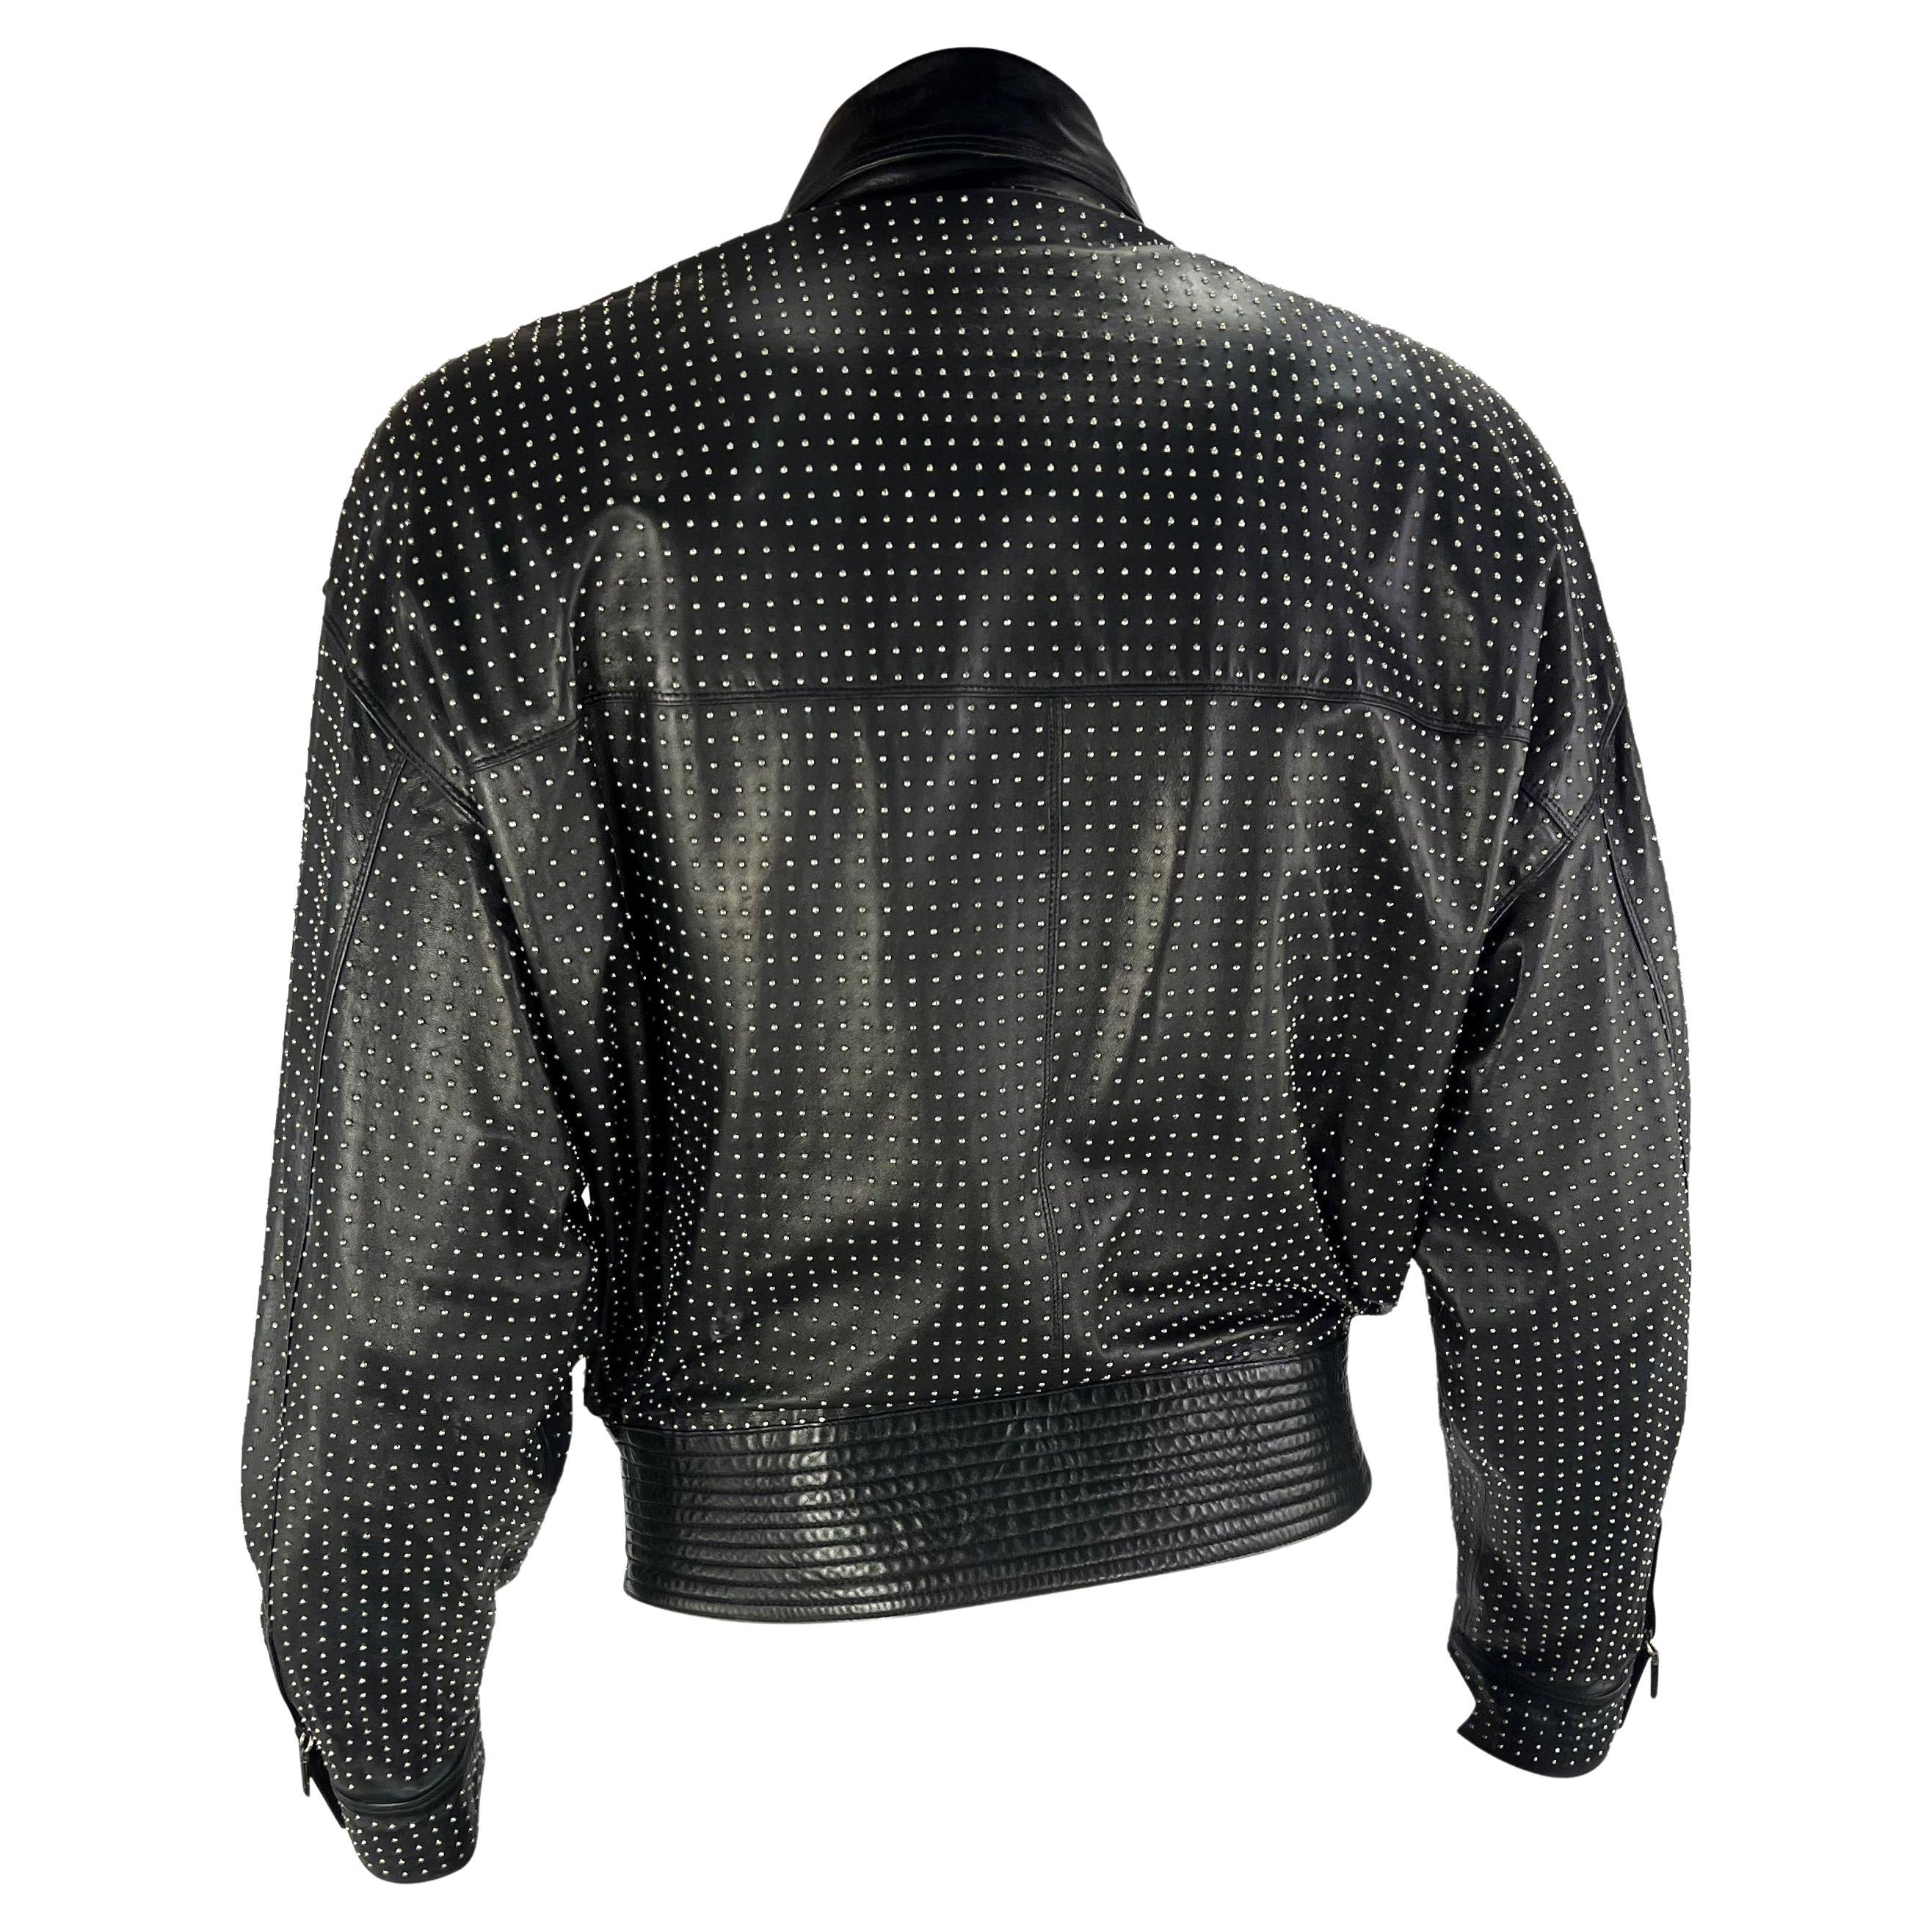 S/S 1992 Gianni Versace Men's Runway Studded Leather Greek Key Moto Jacket 1